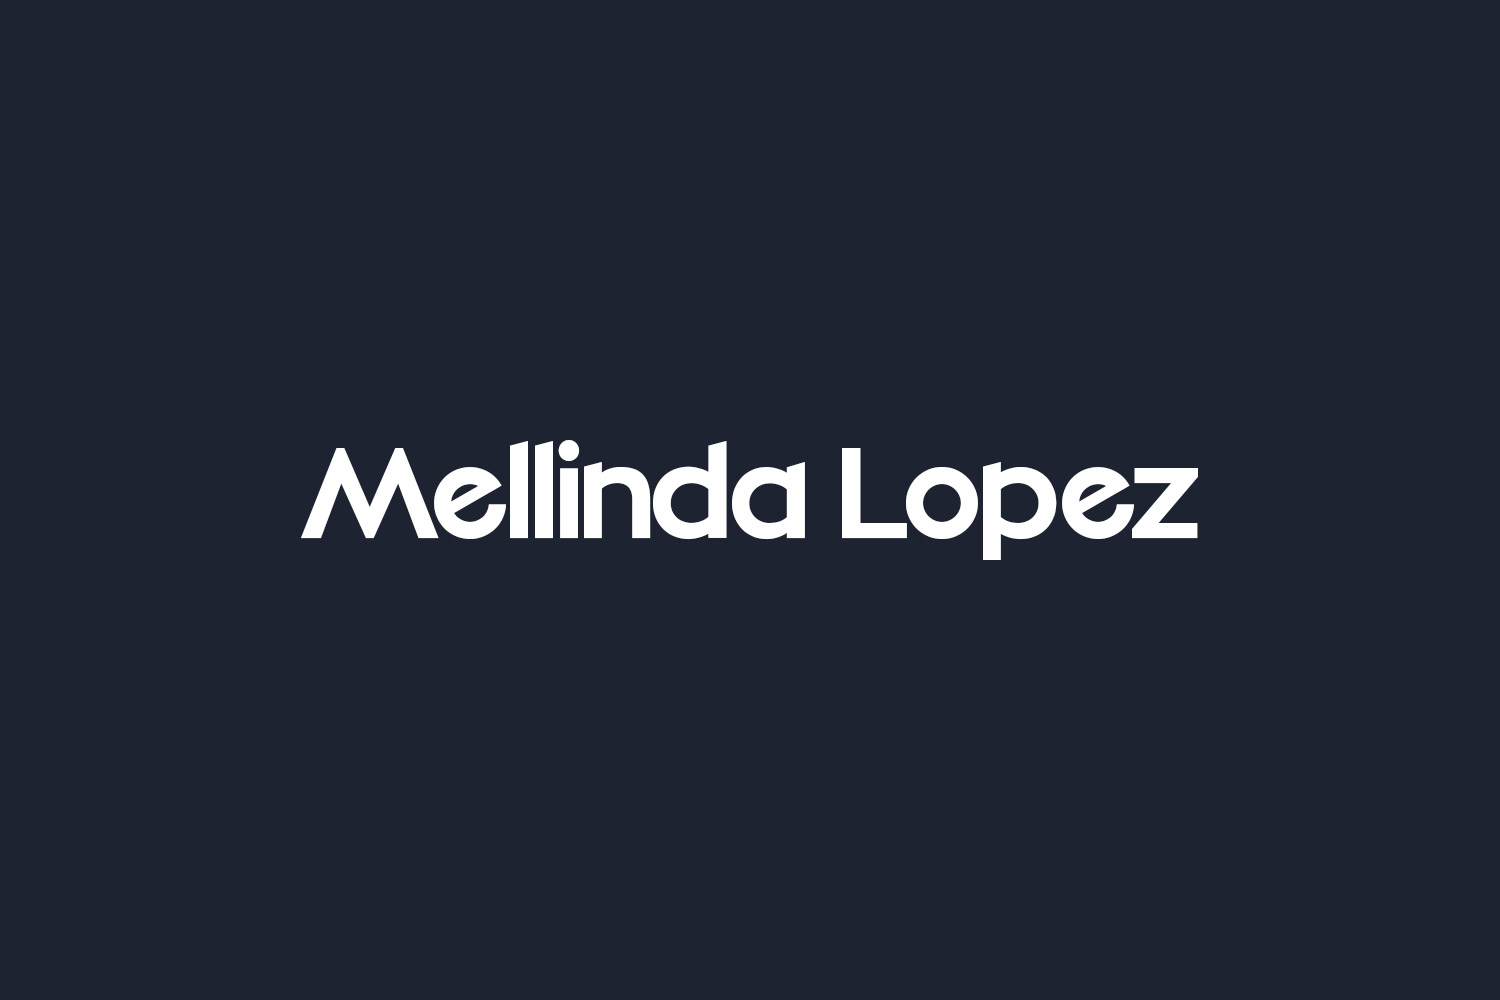 Mellinda Lopez Free Font